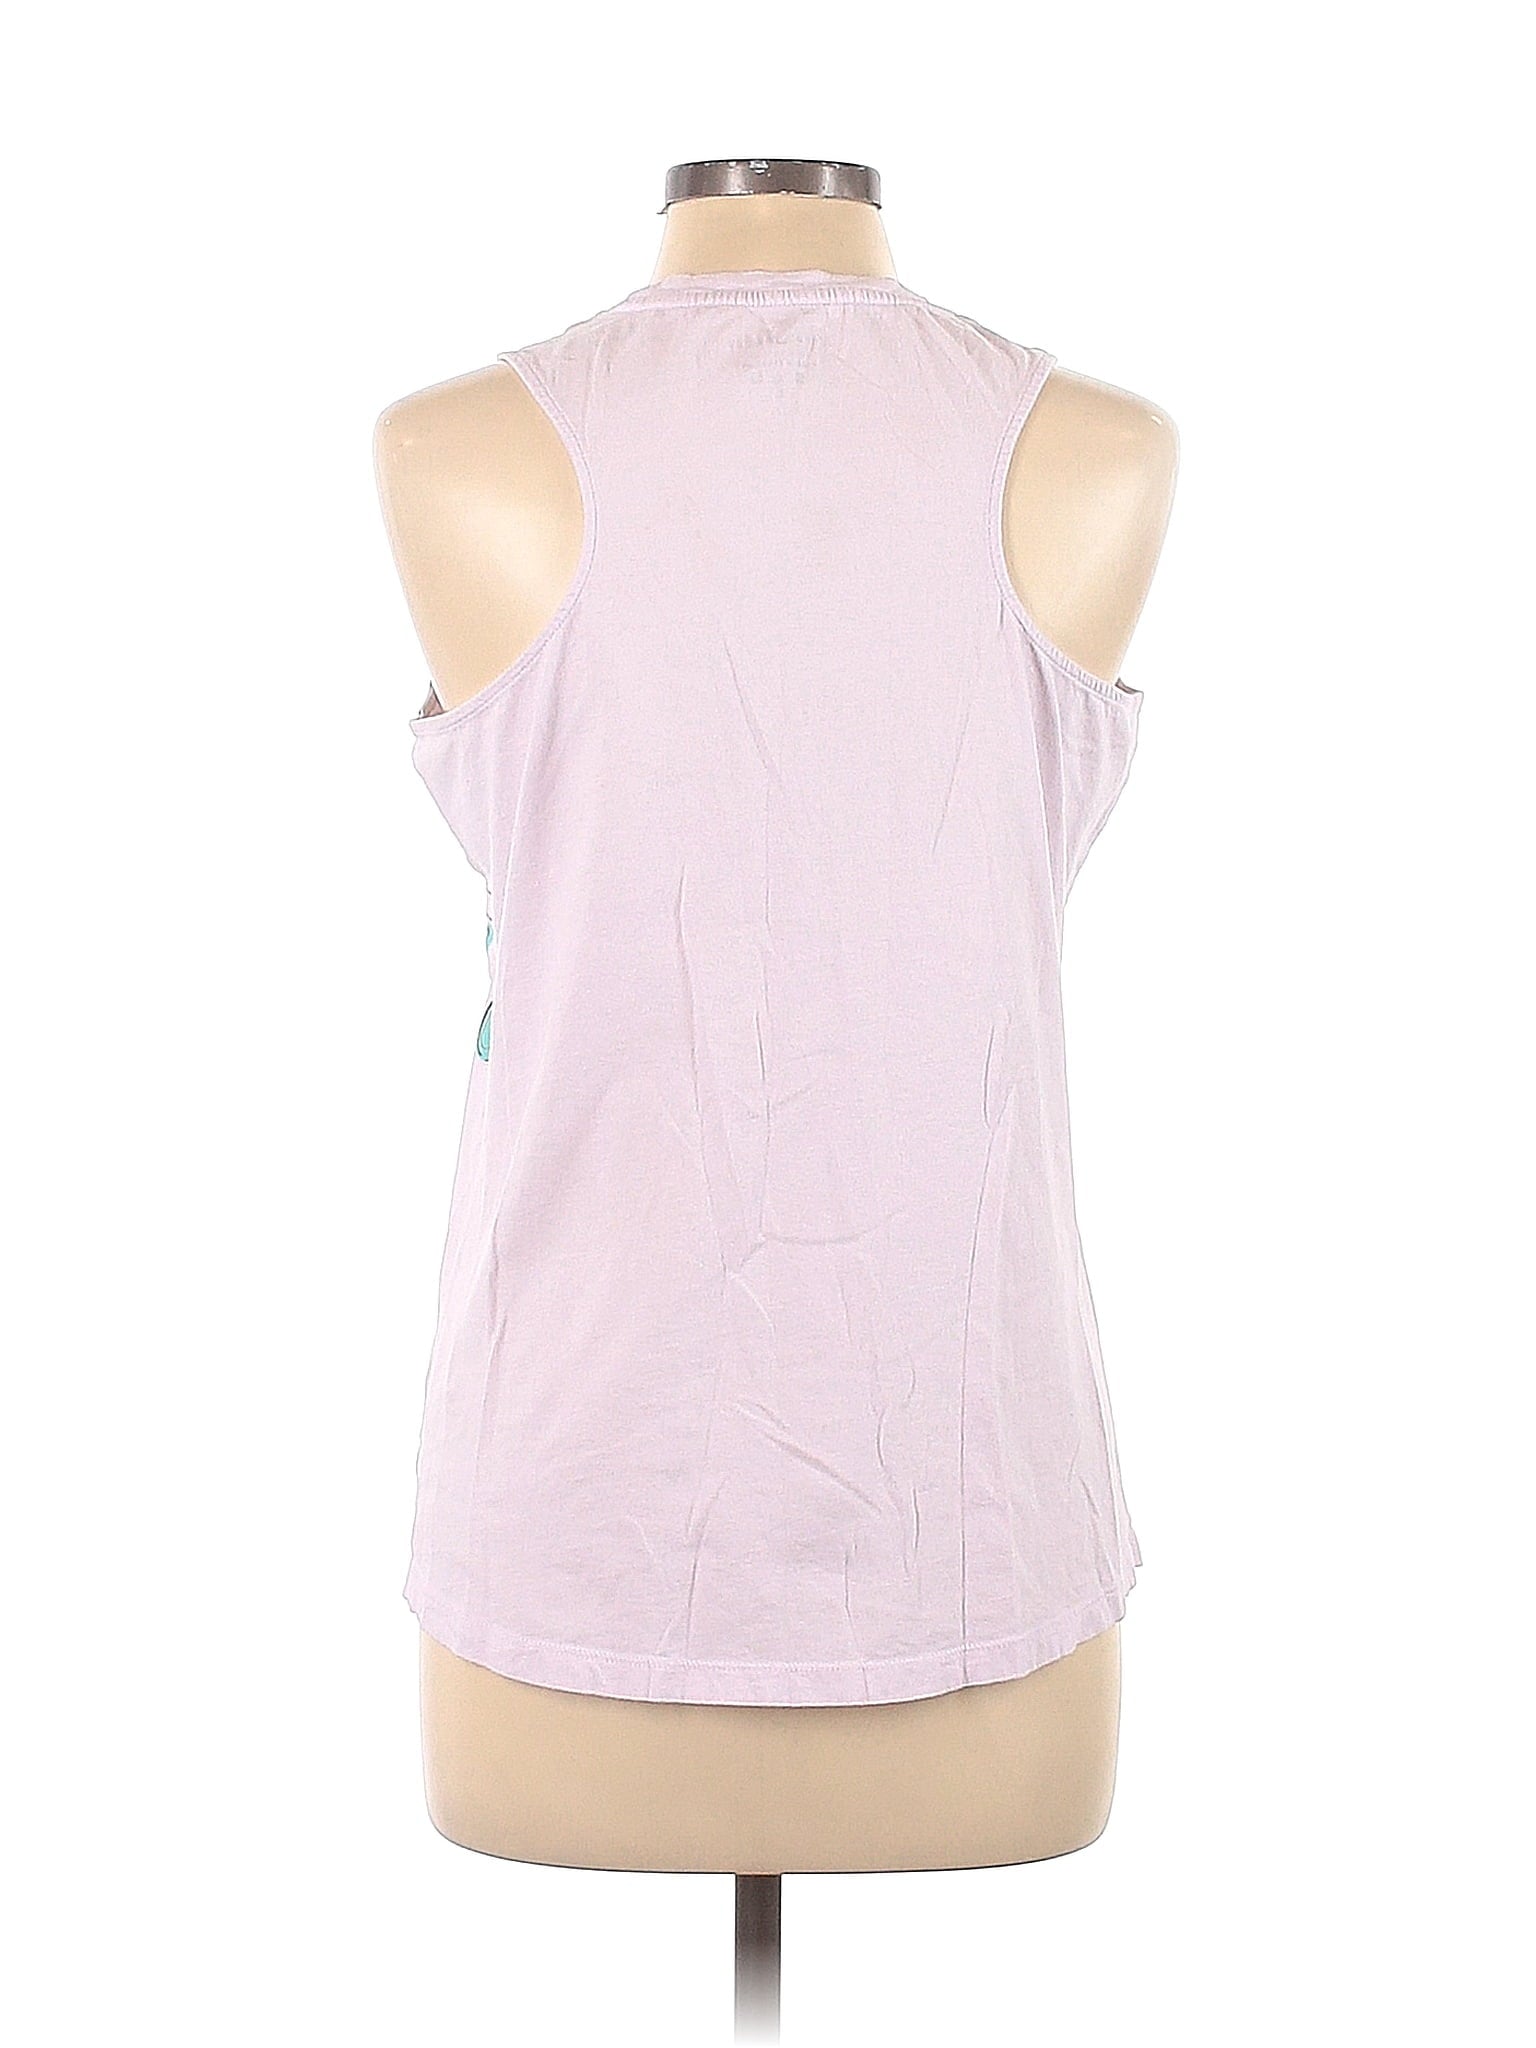 Sleeveless T Shirt size - L